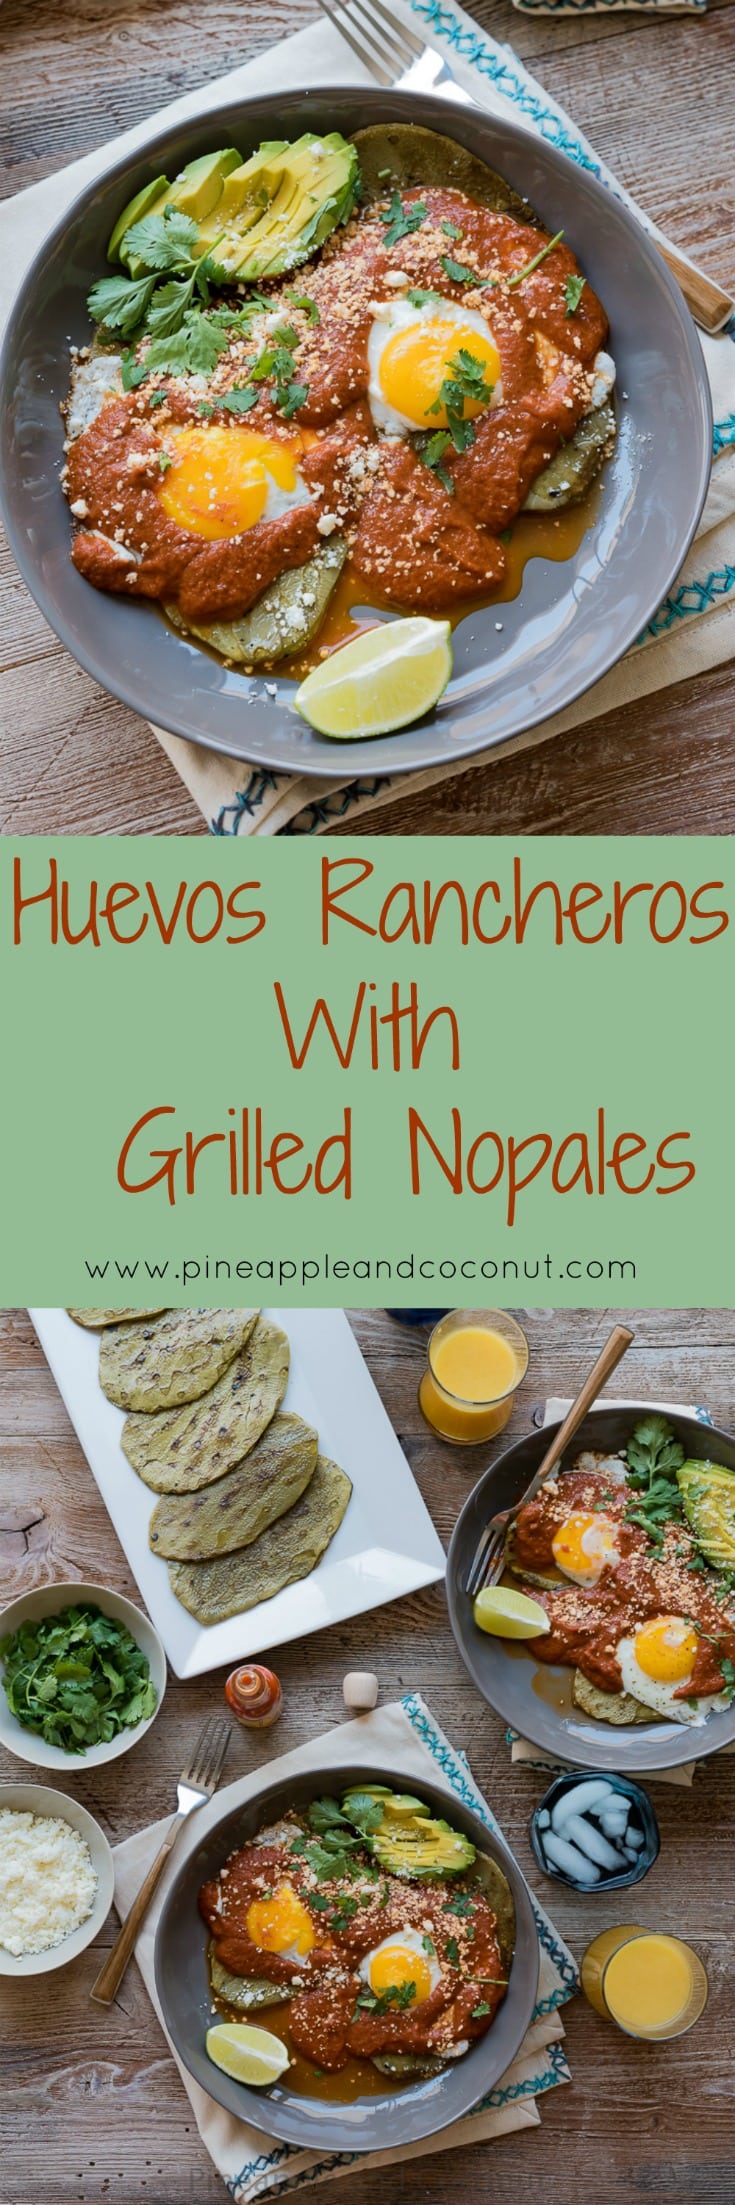 Huevos Rancheros with Grilled Nopales #ad #discoverworldmarket www.pineappleandcoconut.com